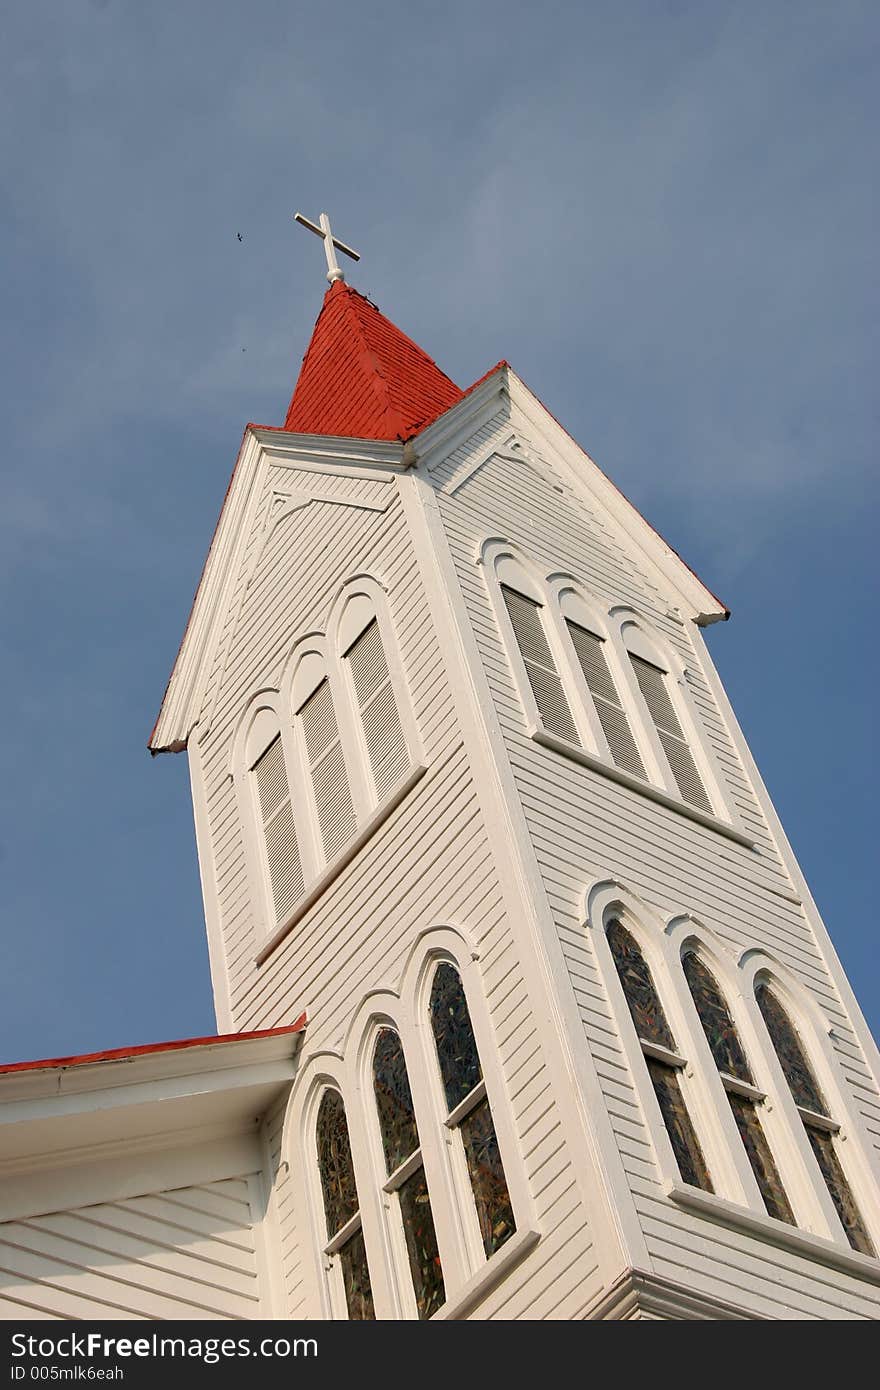 Historic church steeple in South Carolina